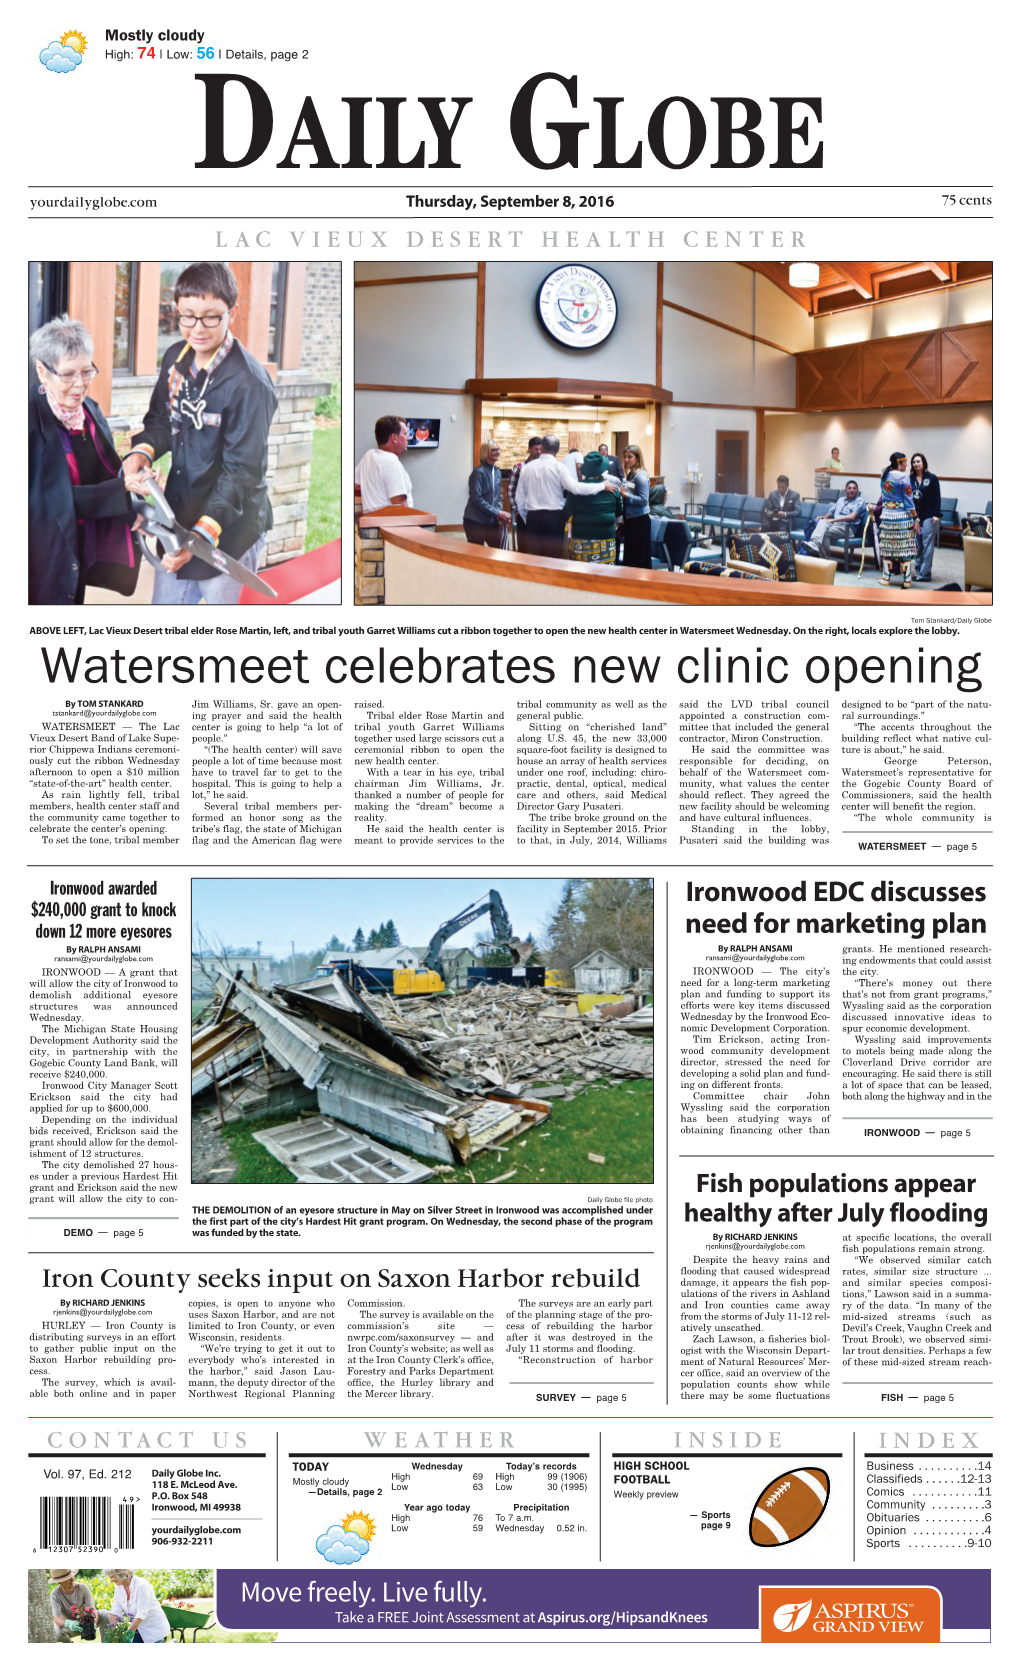 Watersmeet Celebrates New Clinic Opening by TOM STANKARD Jim Williams, Sr